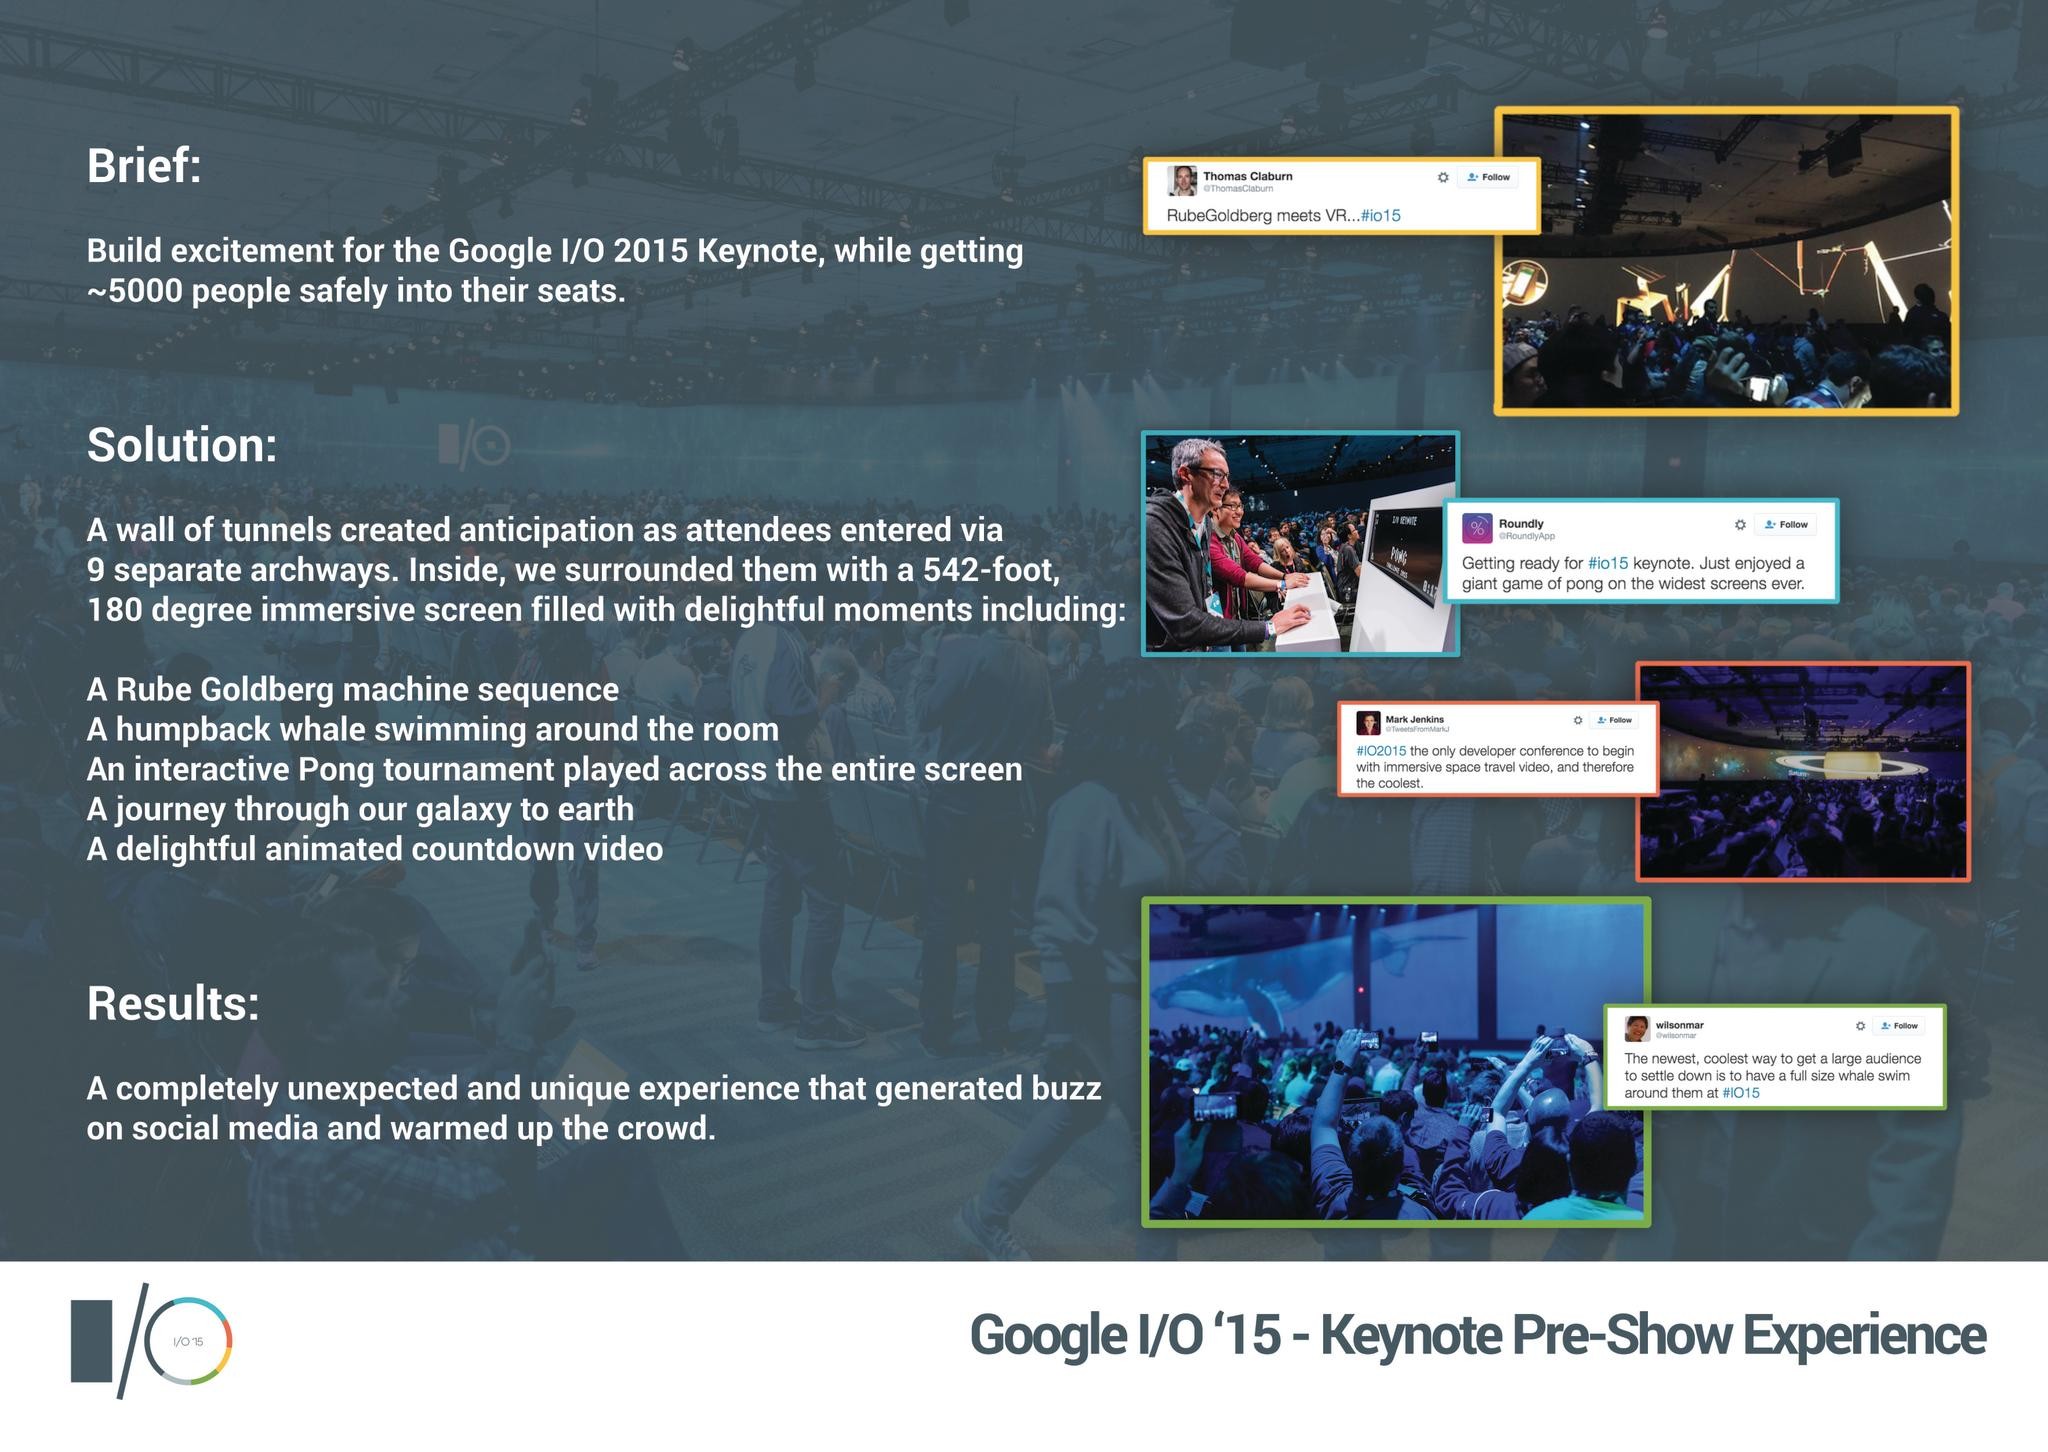 Google I/O 2015 Keynote Pre-Show Experience